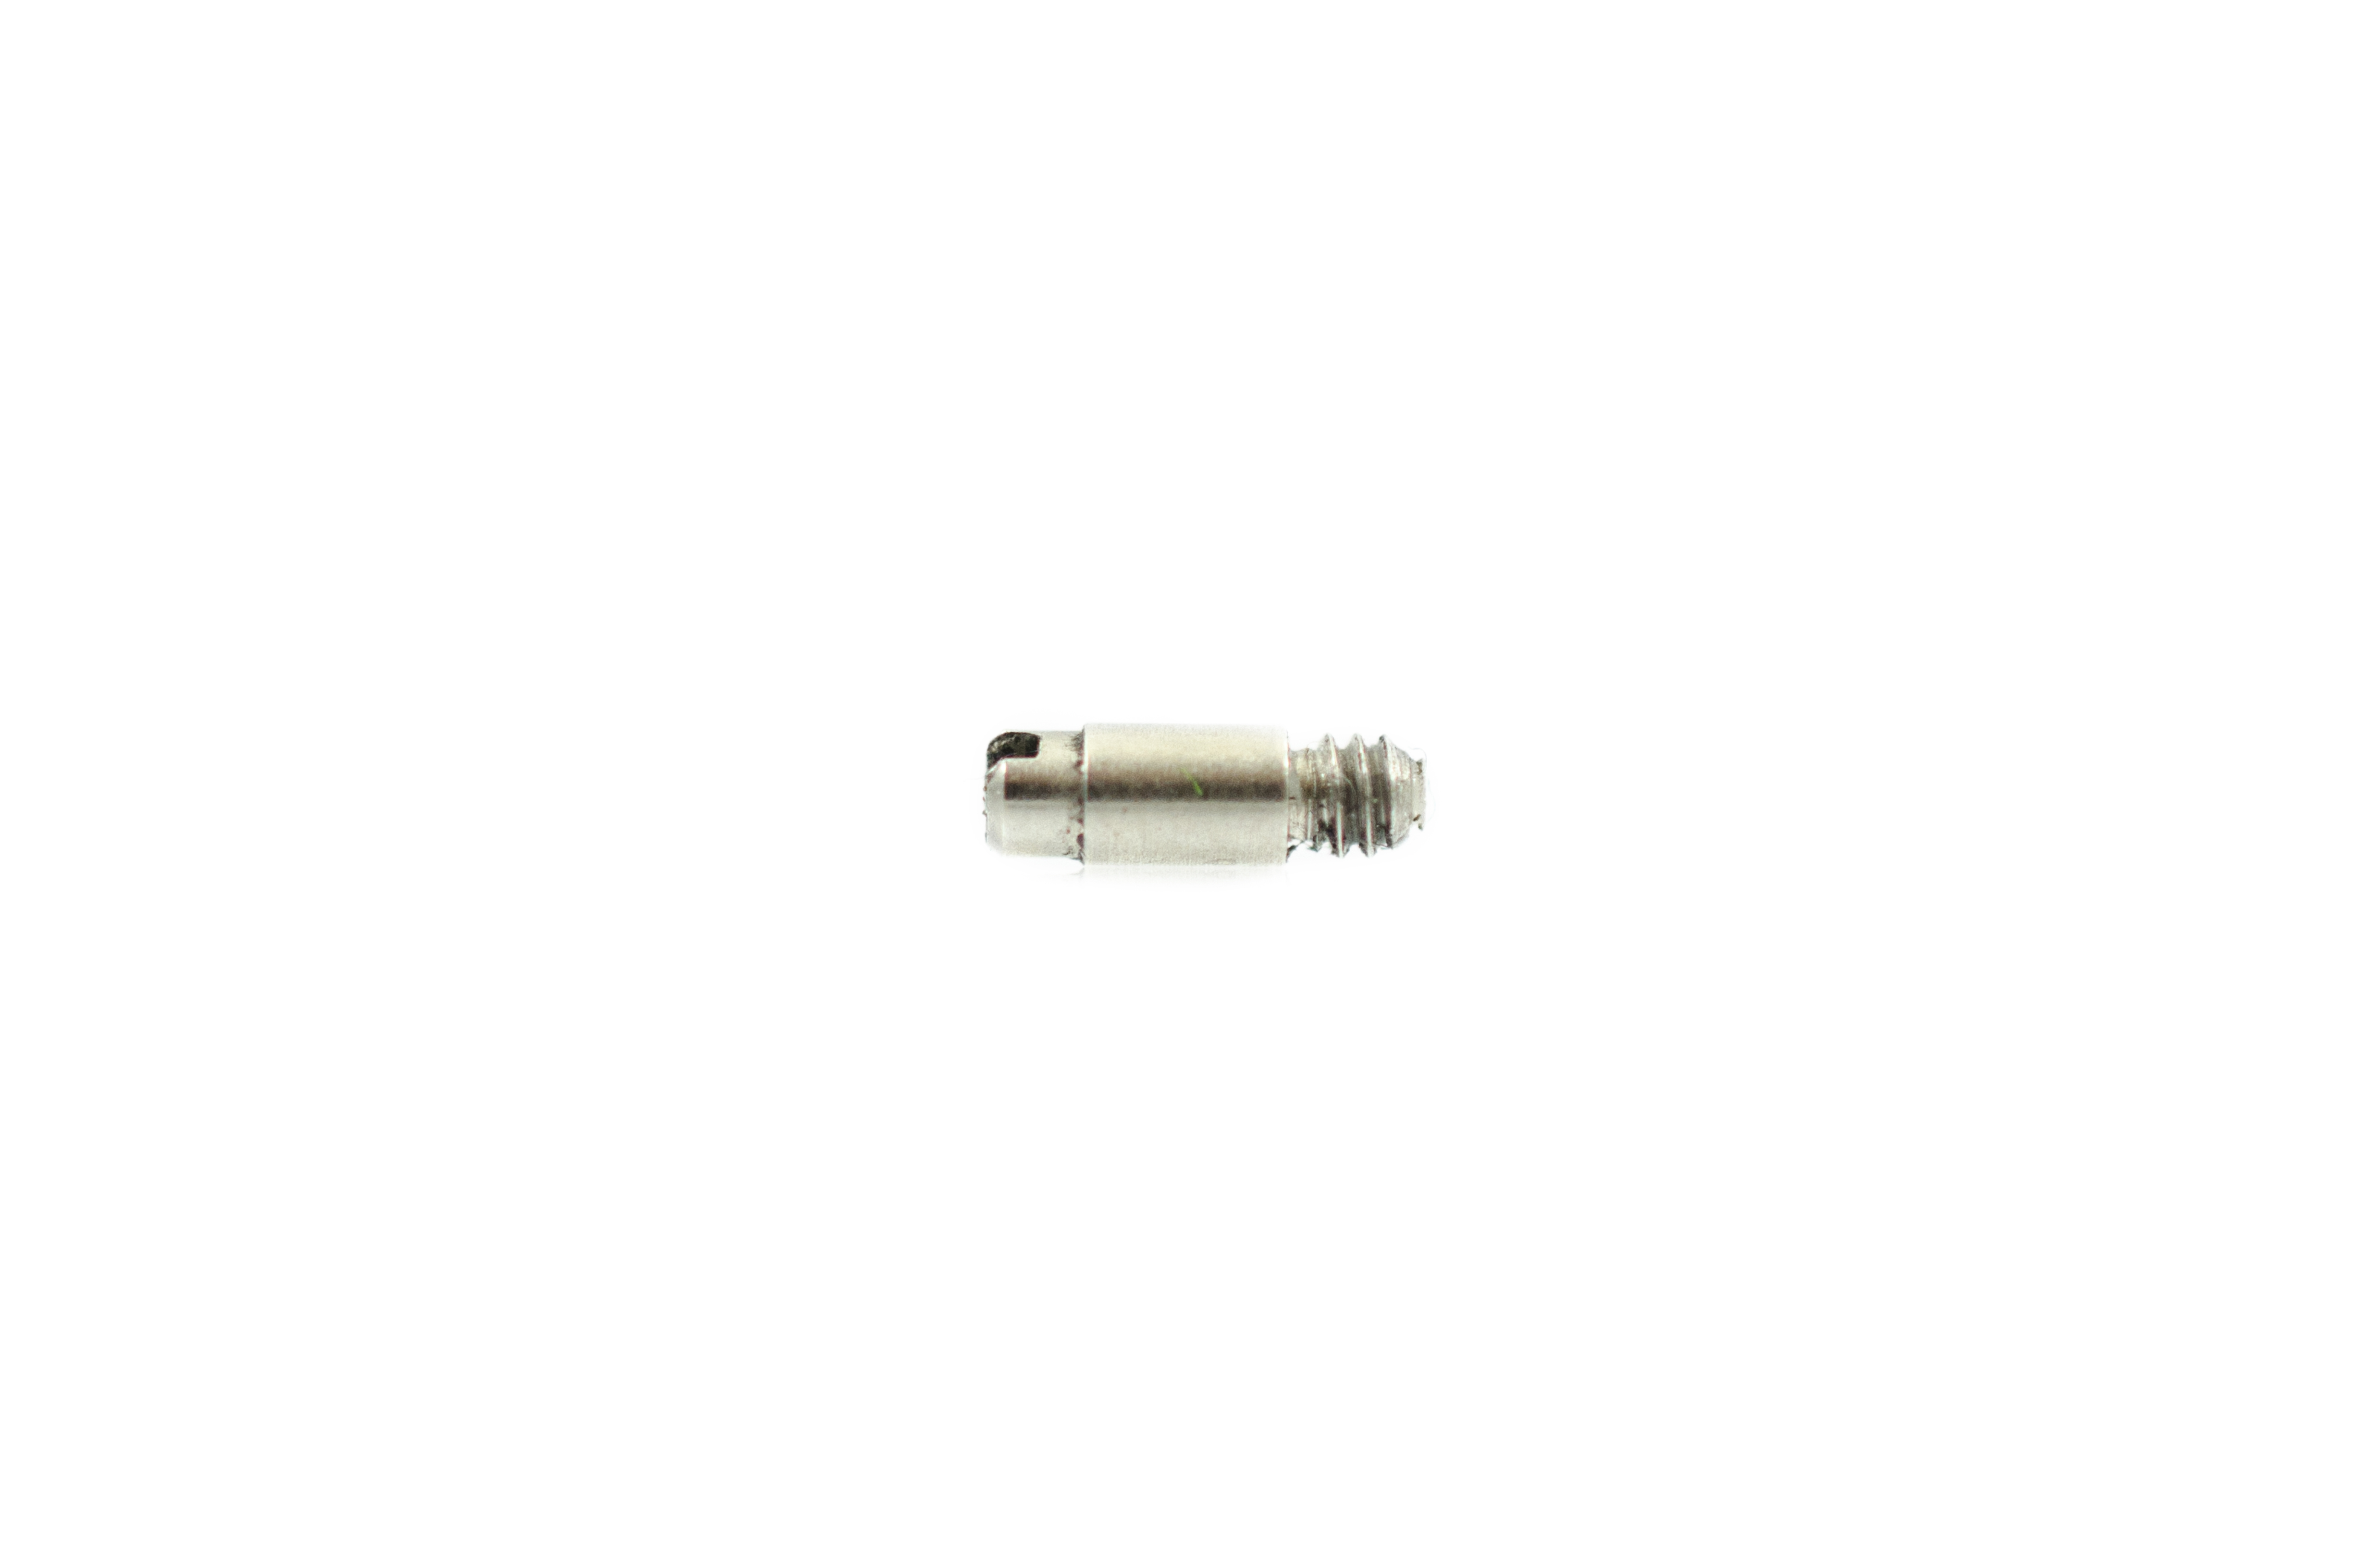 OEM Pin: Freeze Knob Mount - 140, 240 Series